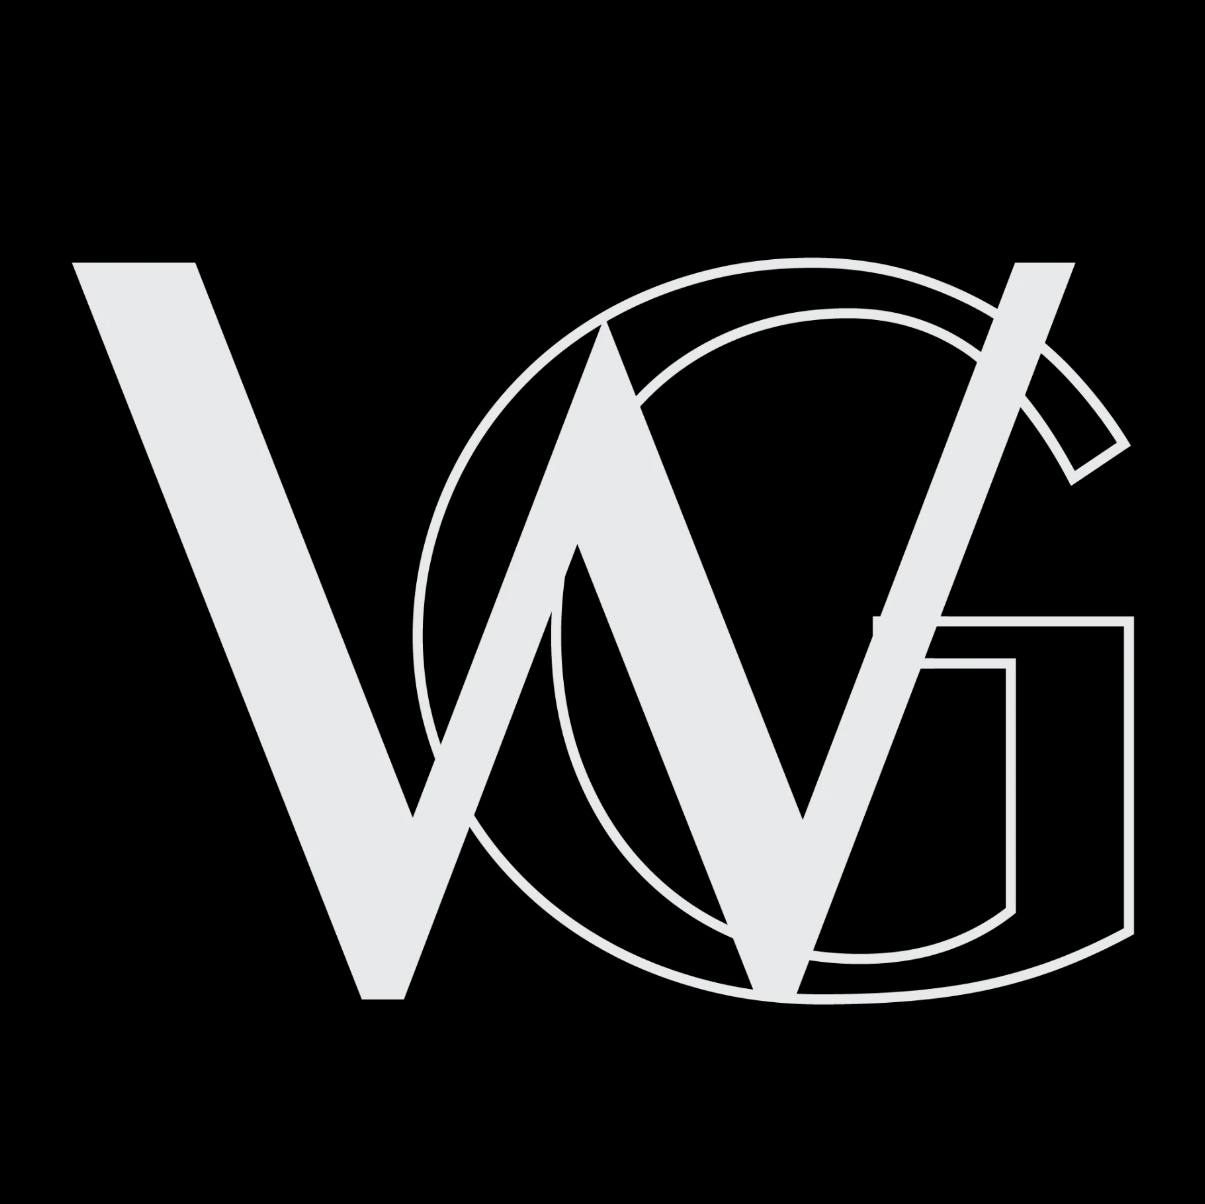 Wellgroomed logo